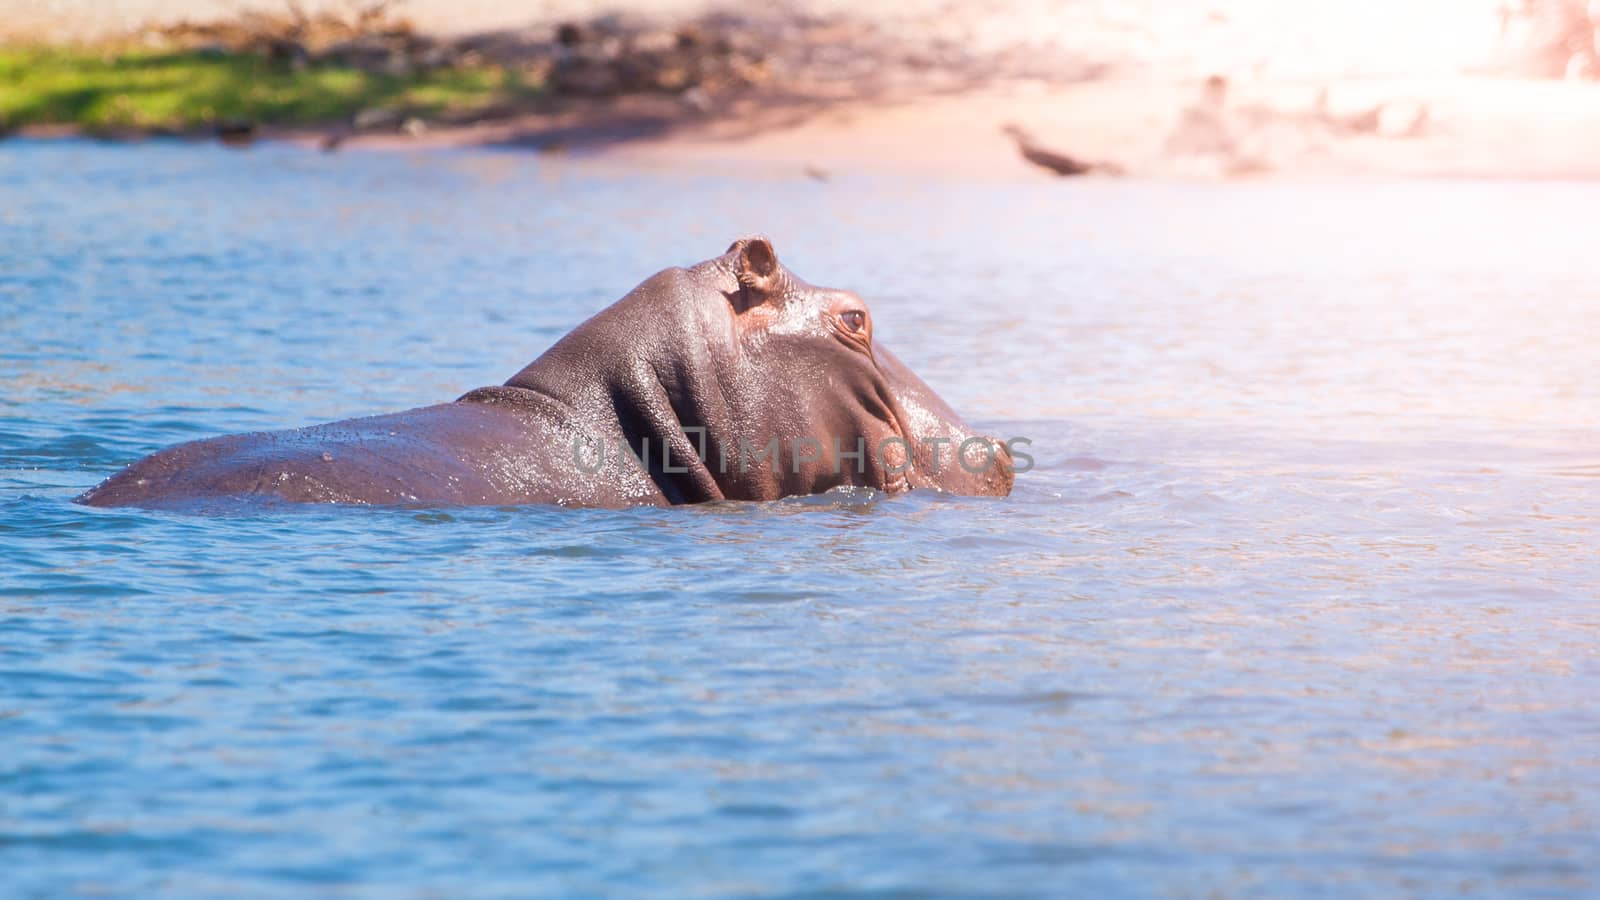 African hippopotamus hidden in the water. Dangerous hippo in natural habitat of Chobe River, Botswana, Africa by pyty